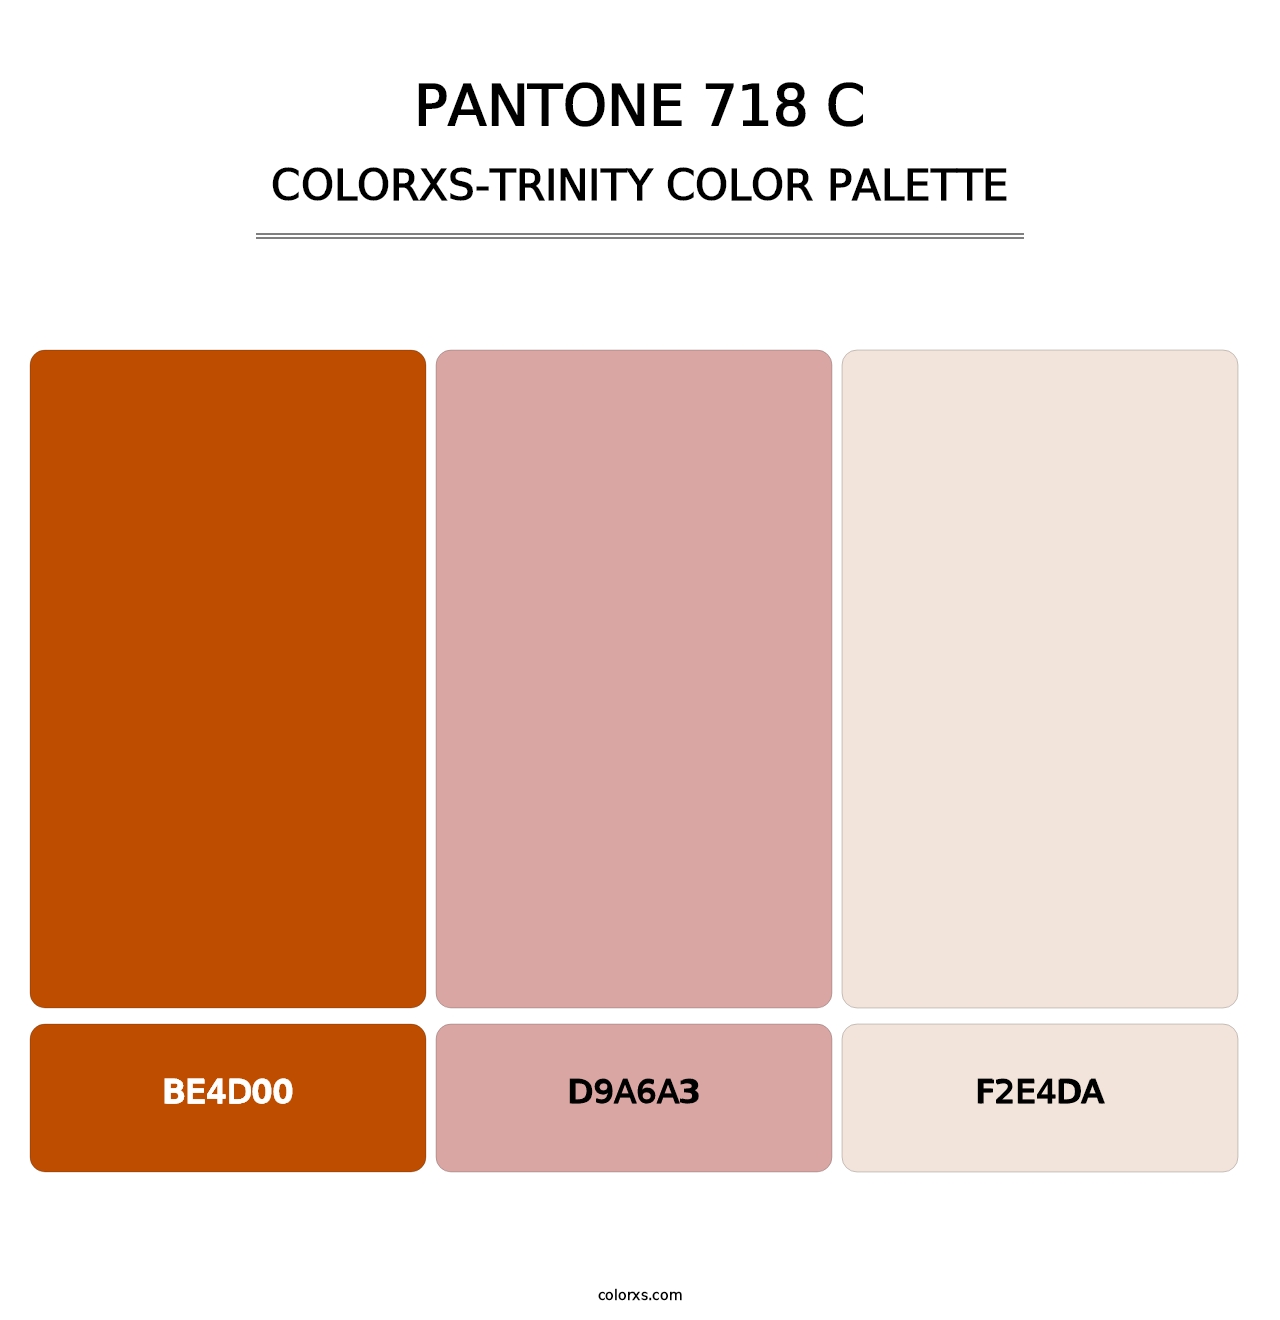 PANTONE 718 C - Colorxs Trinity Palette